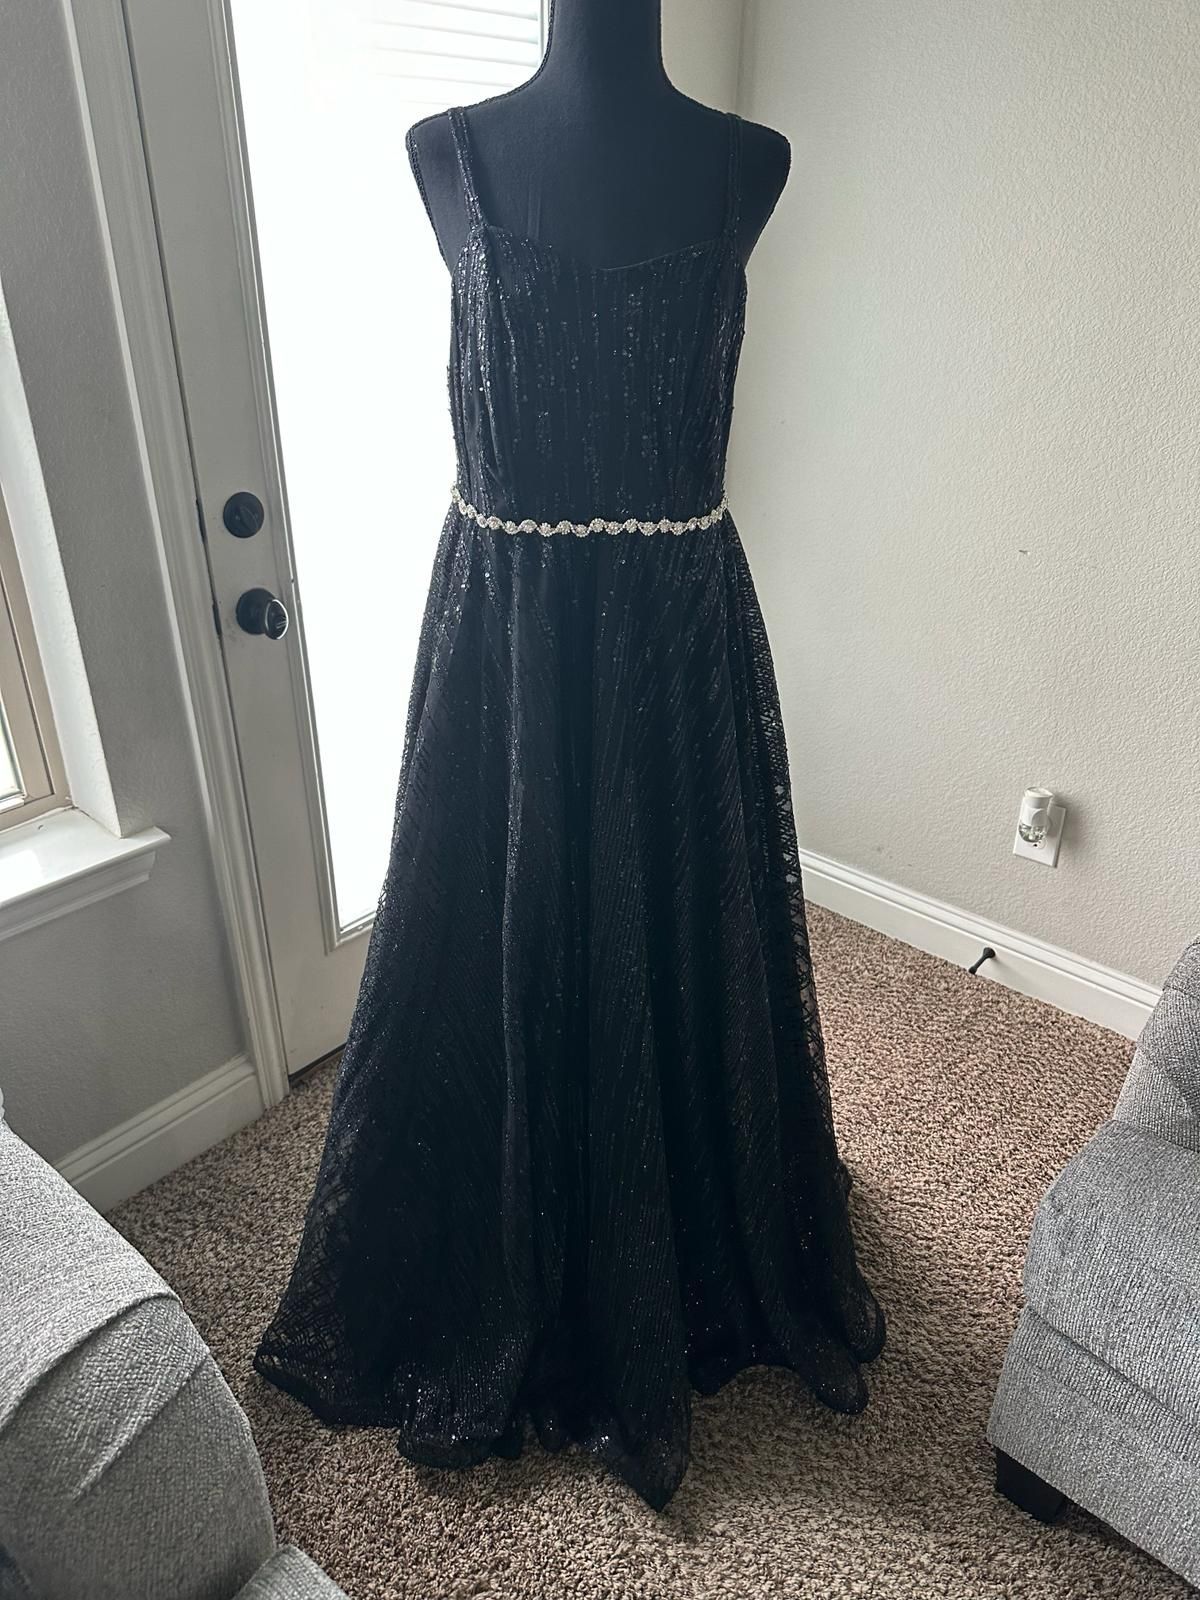 Brand New Party Dress Size 1 X $250 original price asking $150